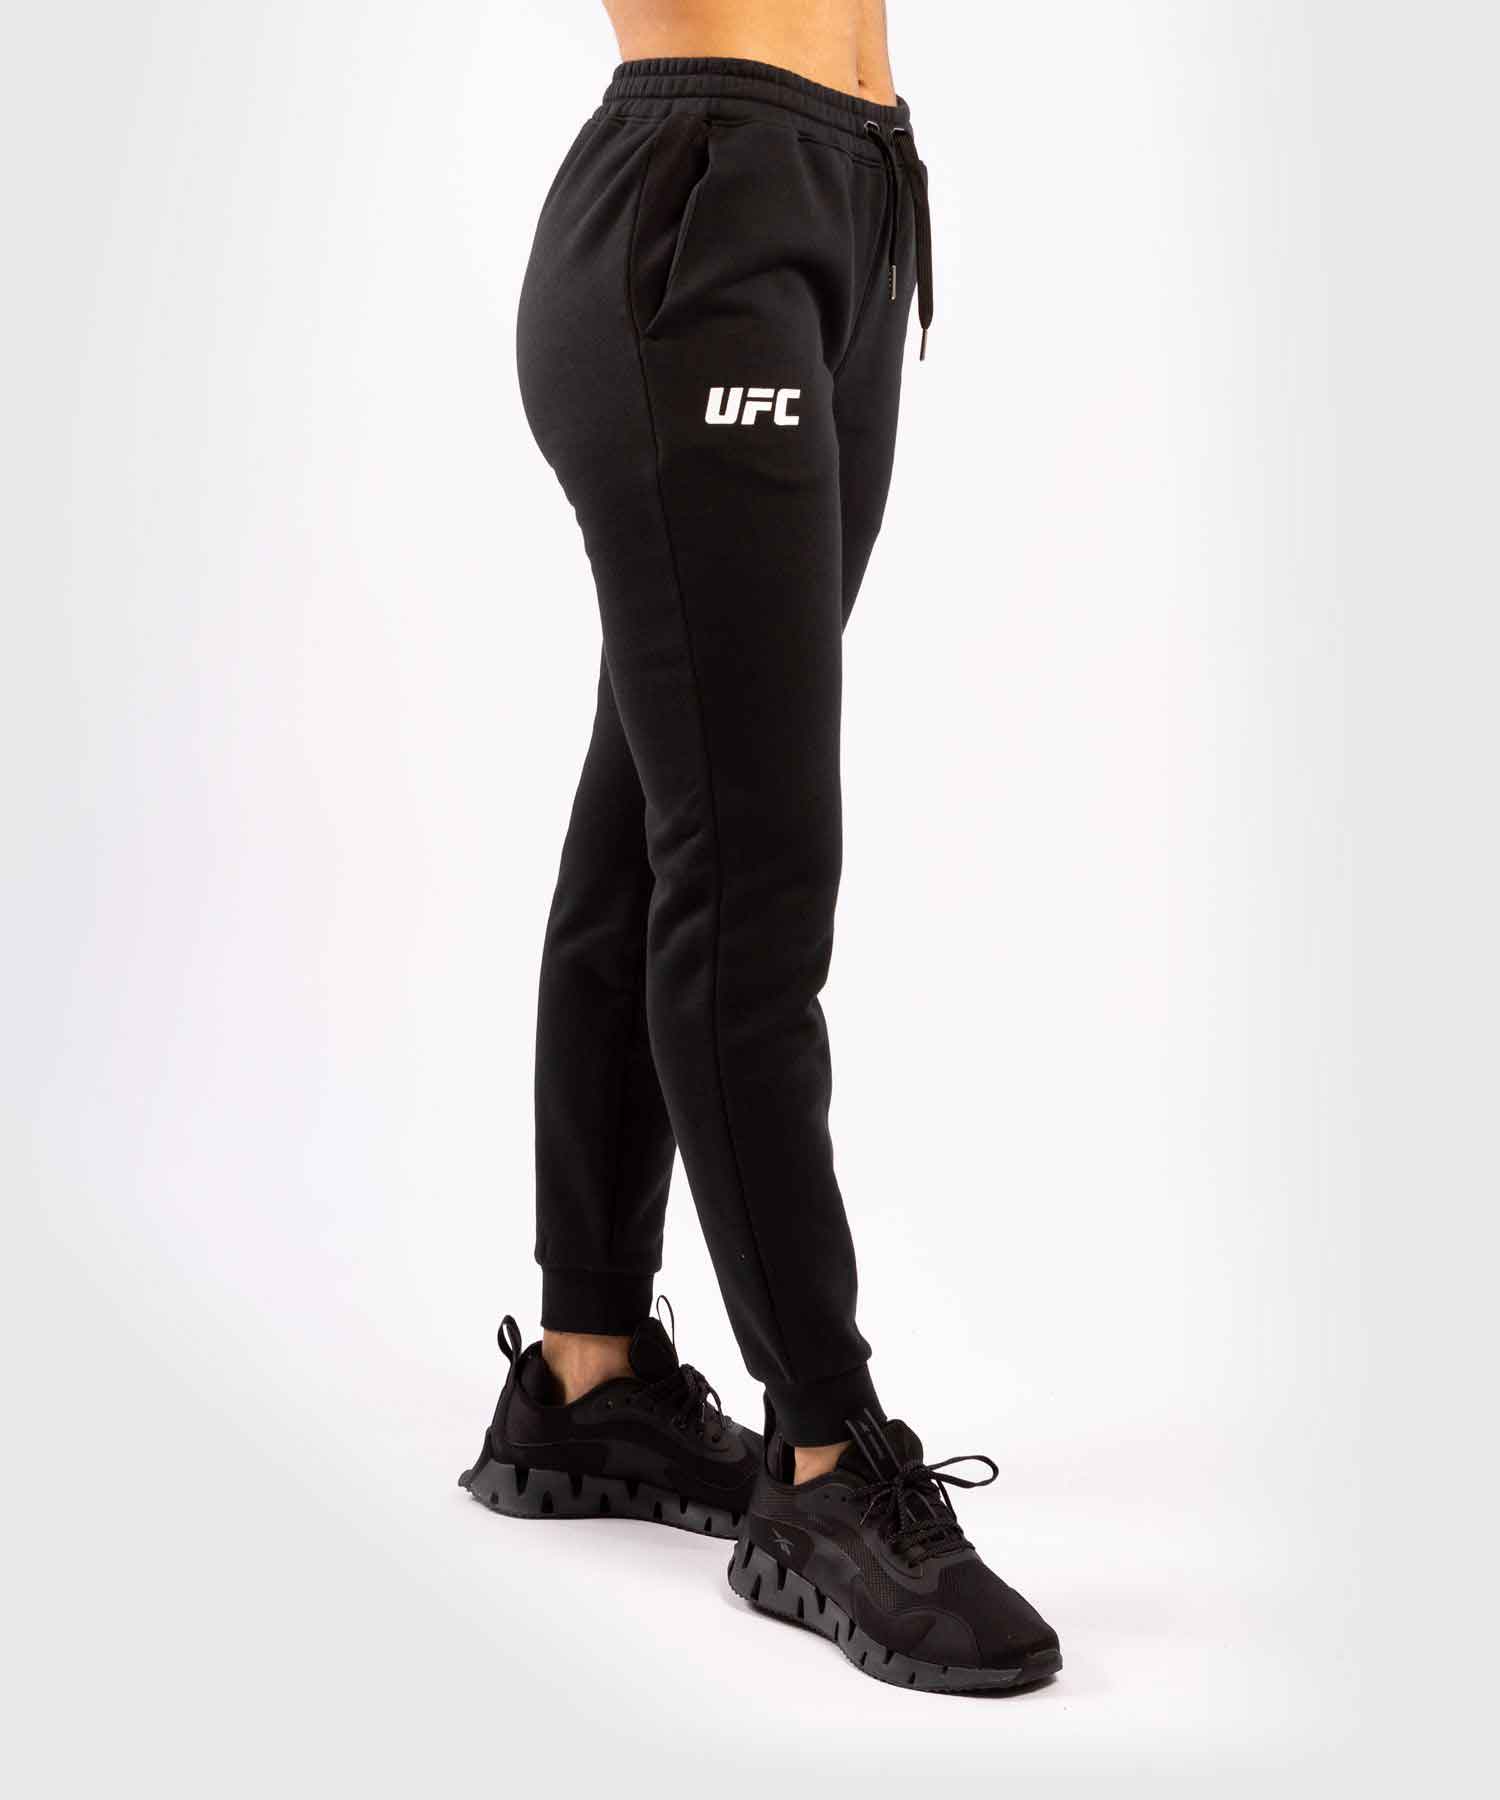 VENUM WOMEN／レディース　スウェットパンツ　　UFC VENUM REPLICA WOMEN'S PANTS／UFC VENUM レプリカ レディース パンツ